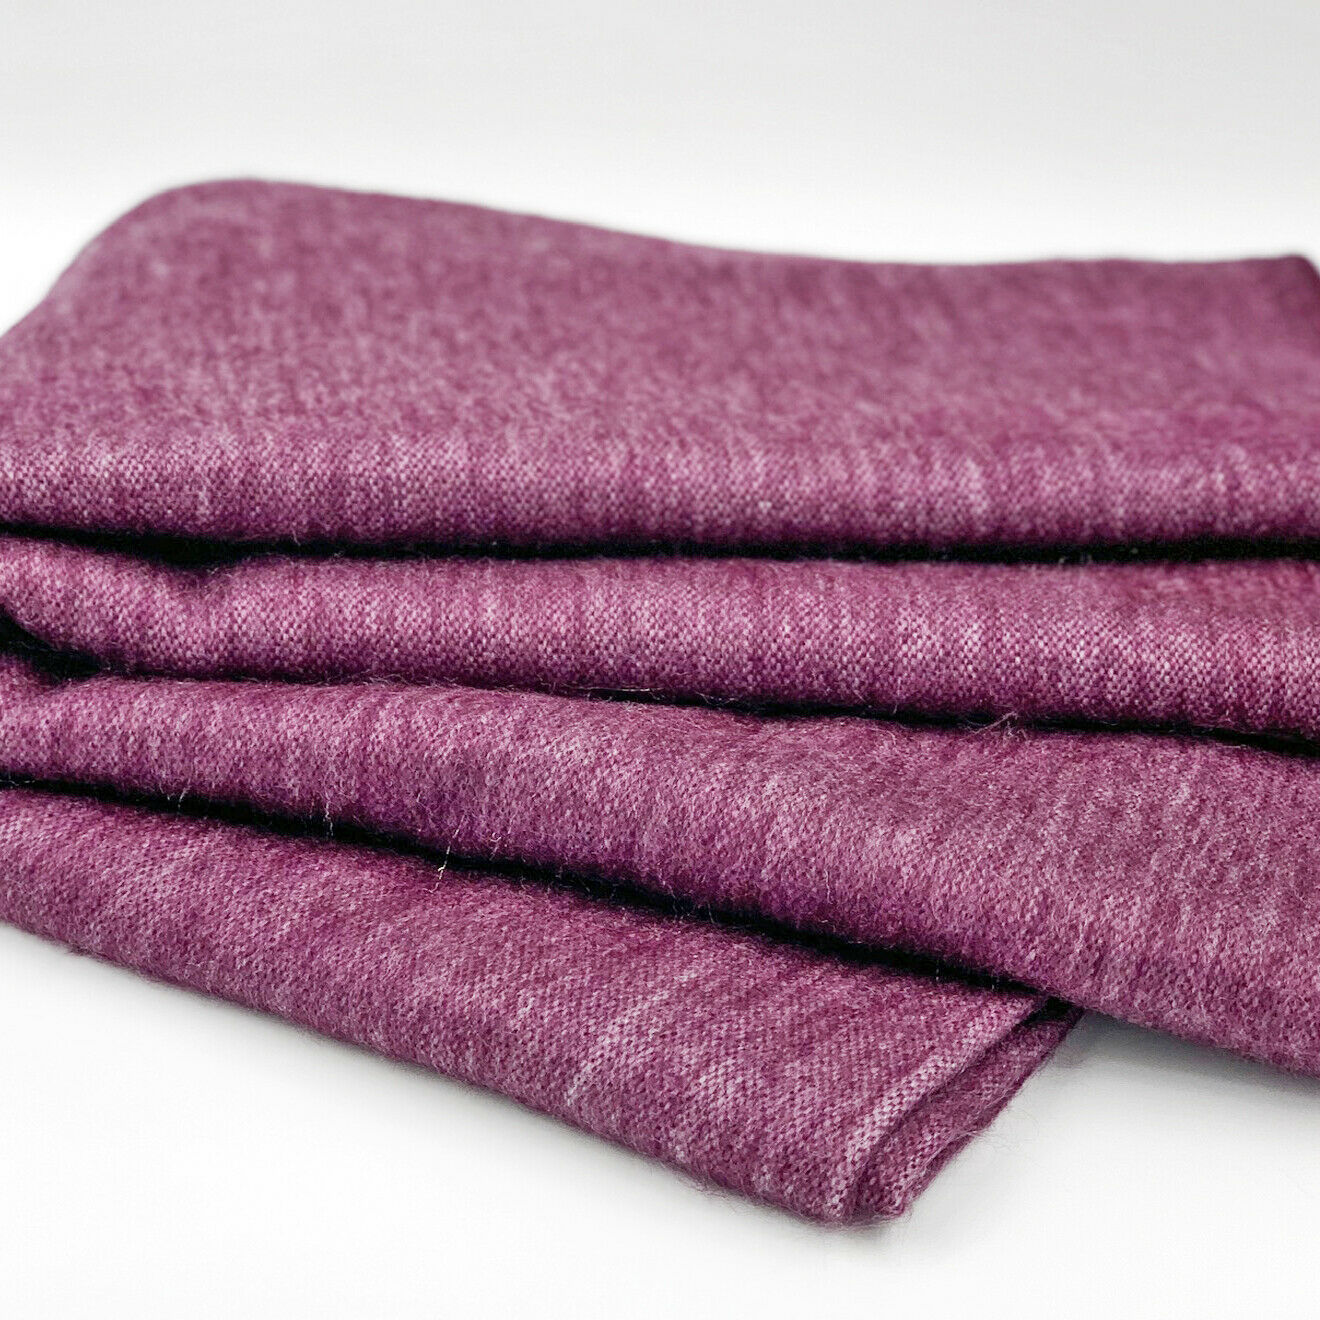 Cunuyacu - Baby Alpaca Wool Throw Blanket / Sofa Cover - Queen 98" x 67" - Striped Pattern Dark Purple Lilac